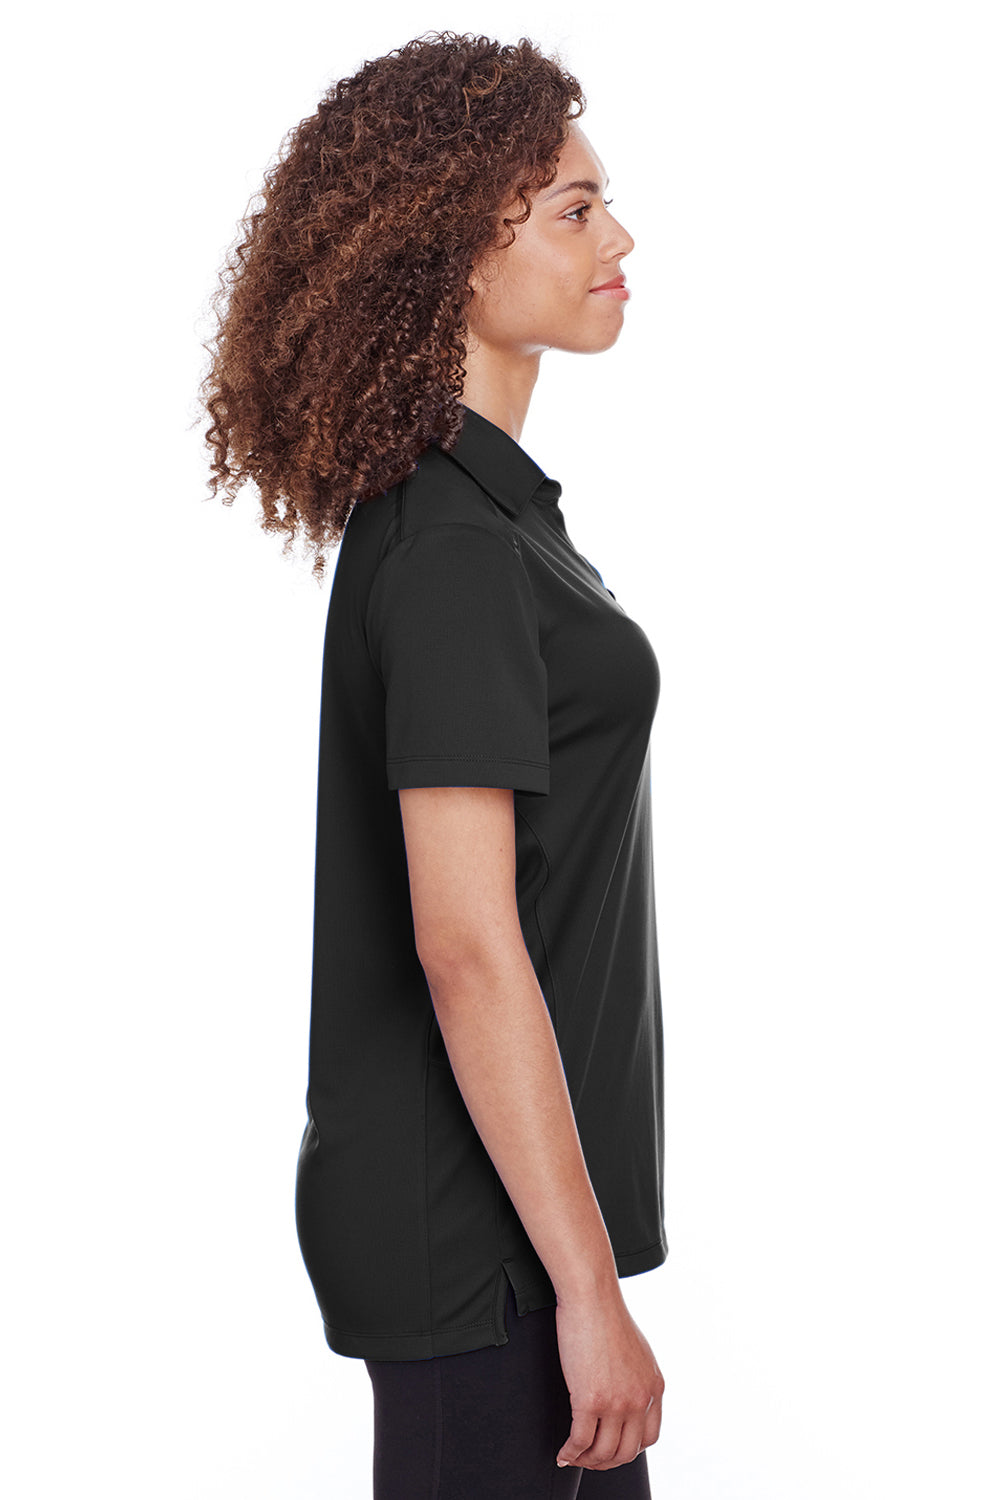 Spyder S16519 Womens Freestyle Short Sleeve Polo Shirt Black Side